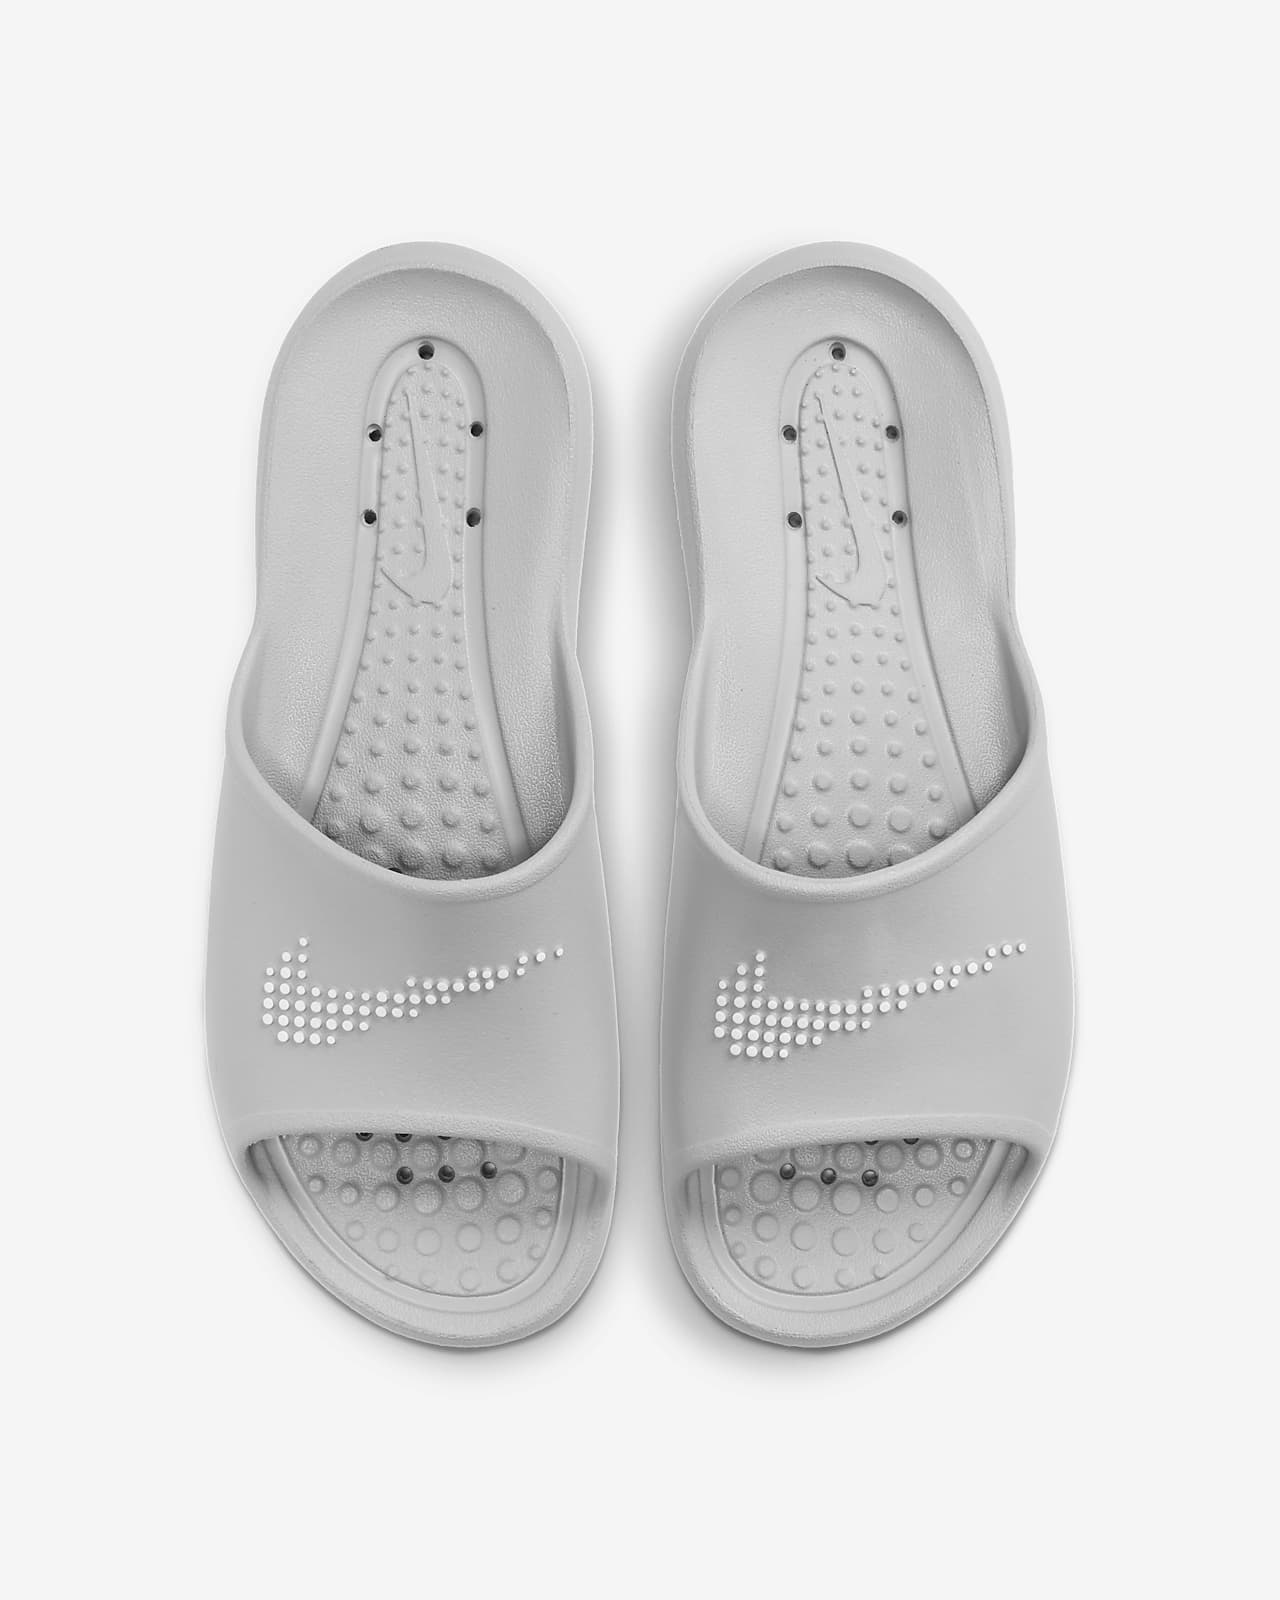 Nike Victori One Men's Shower Slides 